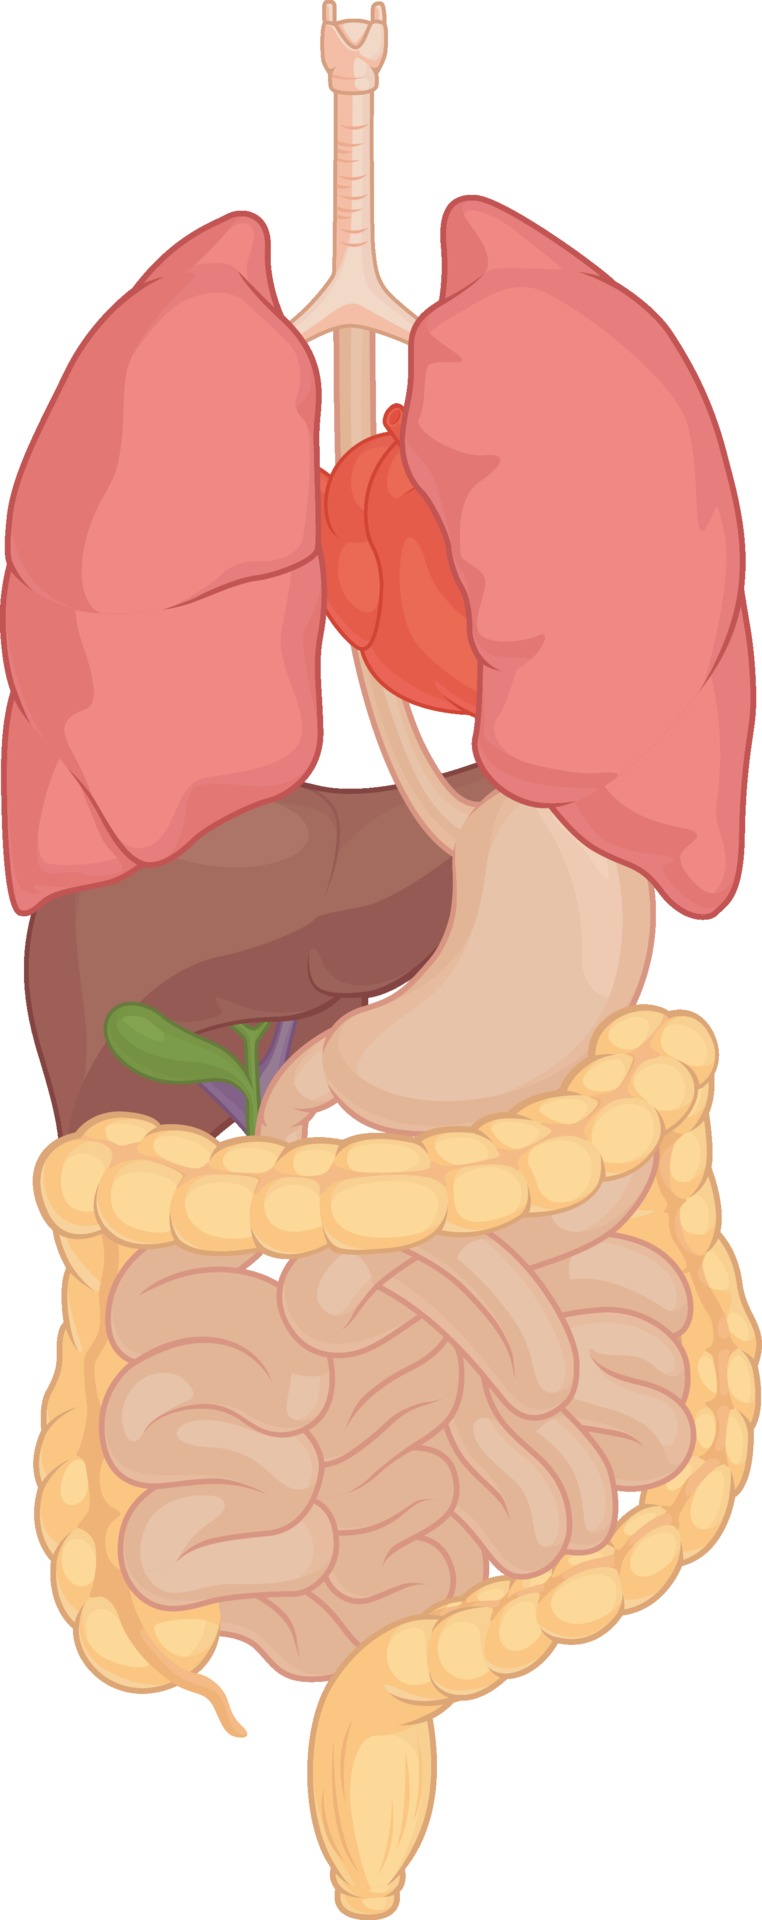 Human Internal Organ Anatomy Body Part Cartoon Isolated Vector Drawing  2185197 Vector Art at Vecteezy